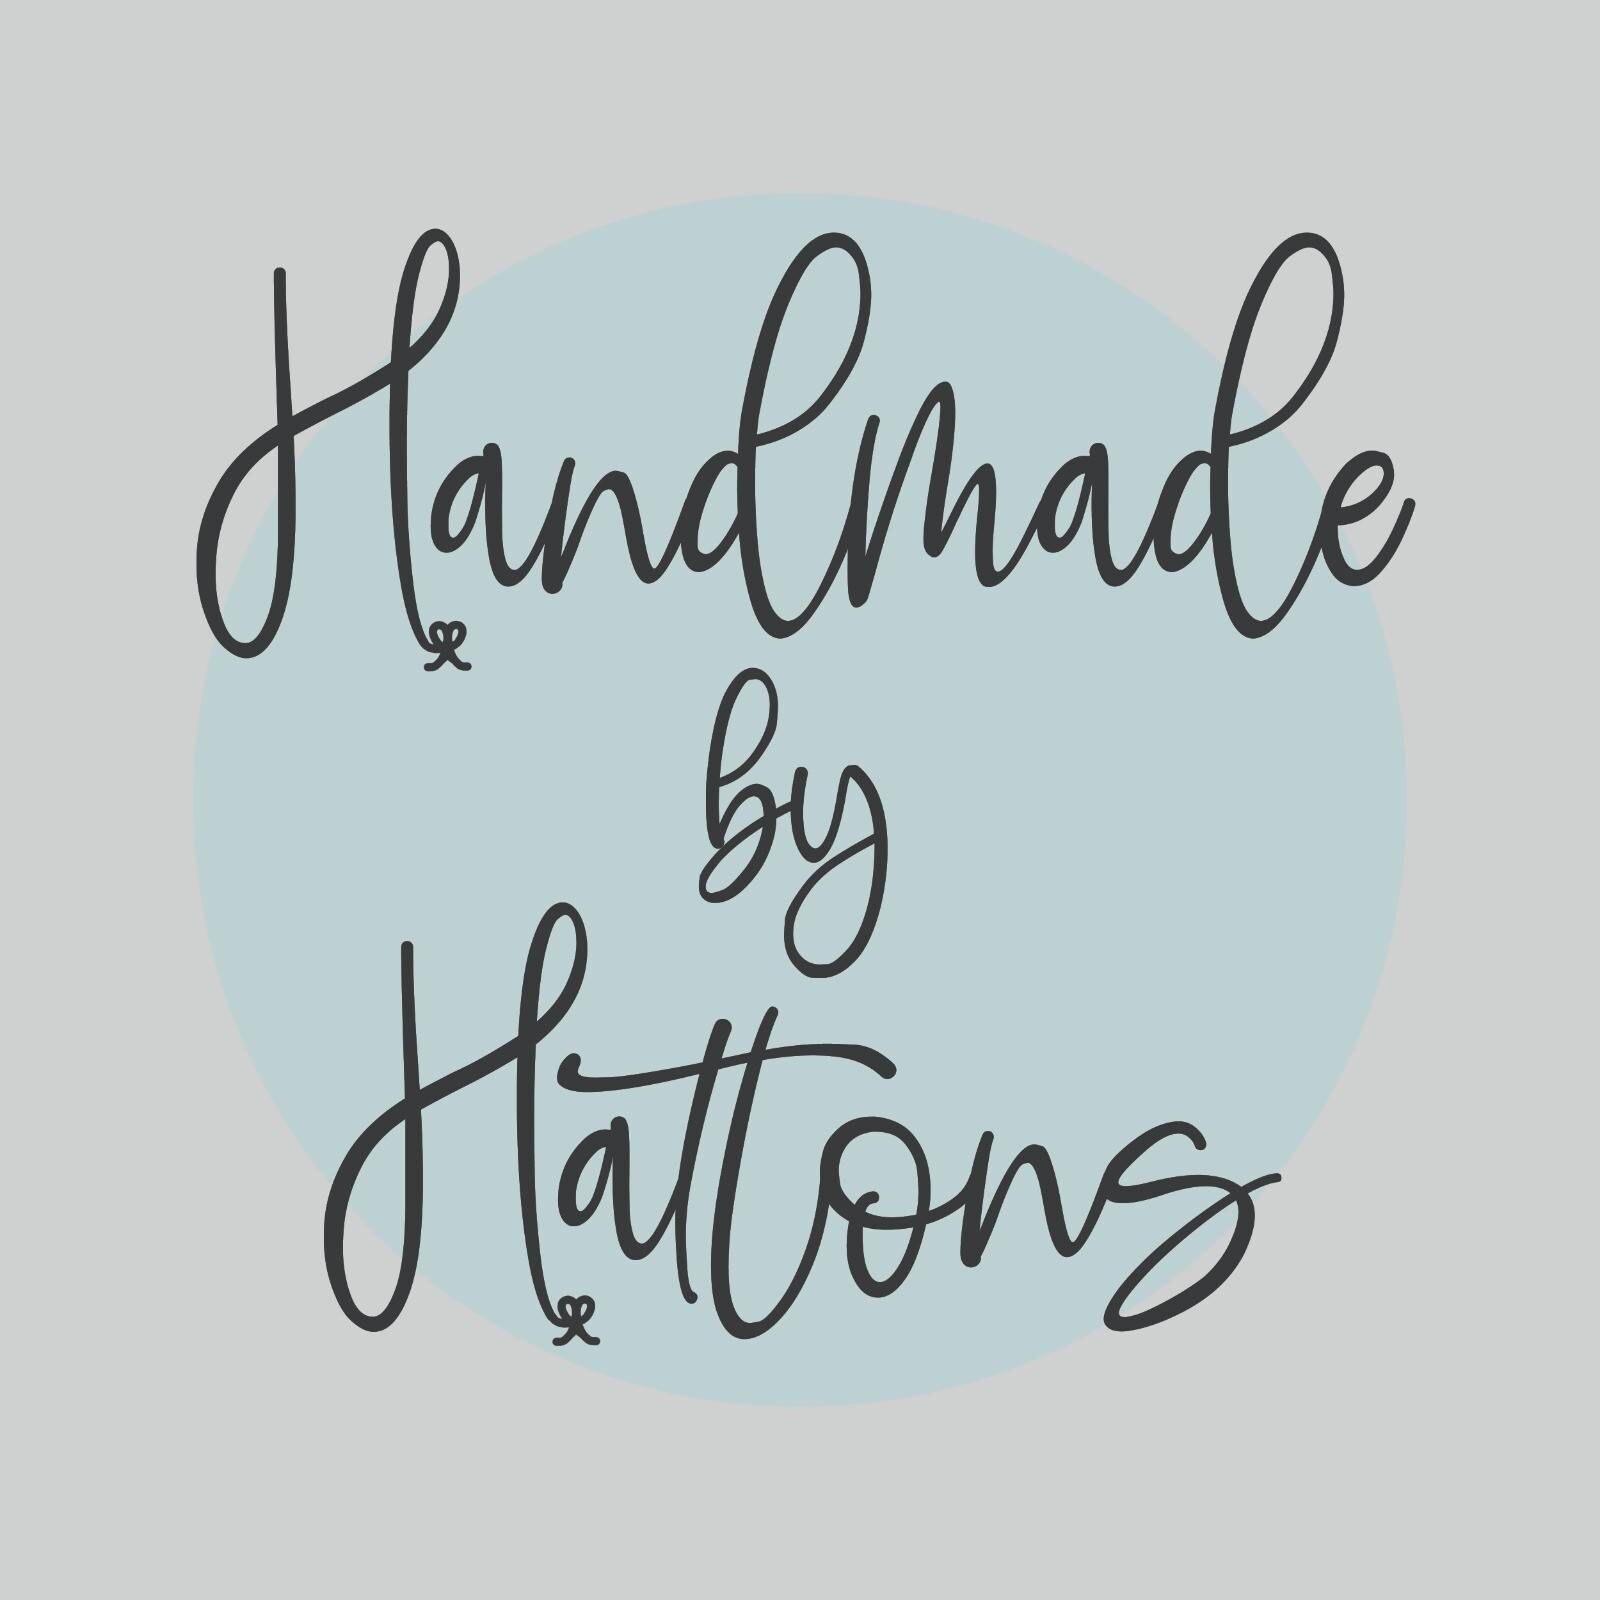 HandmadebyHattons - Etsy